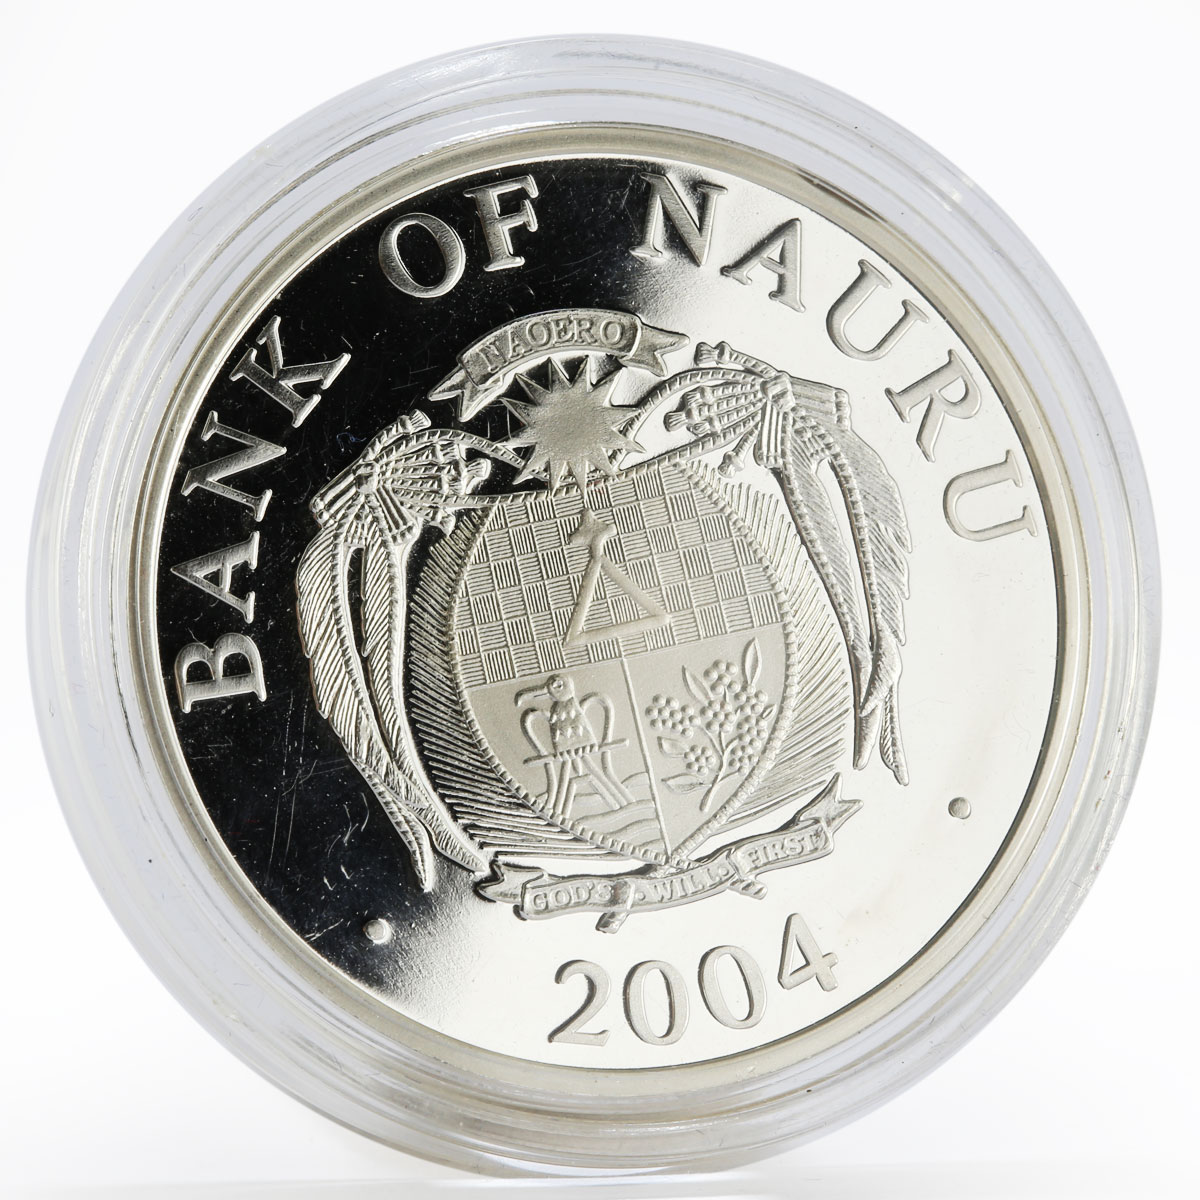 Nauru 10 dollars Italy Colesum in Rome silver gilded coin 2004